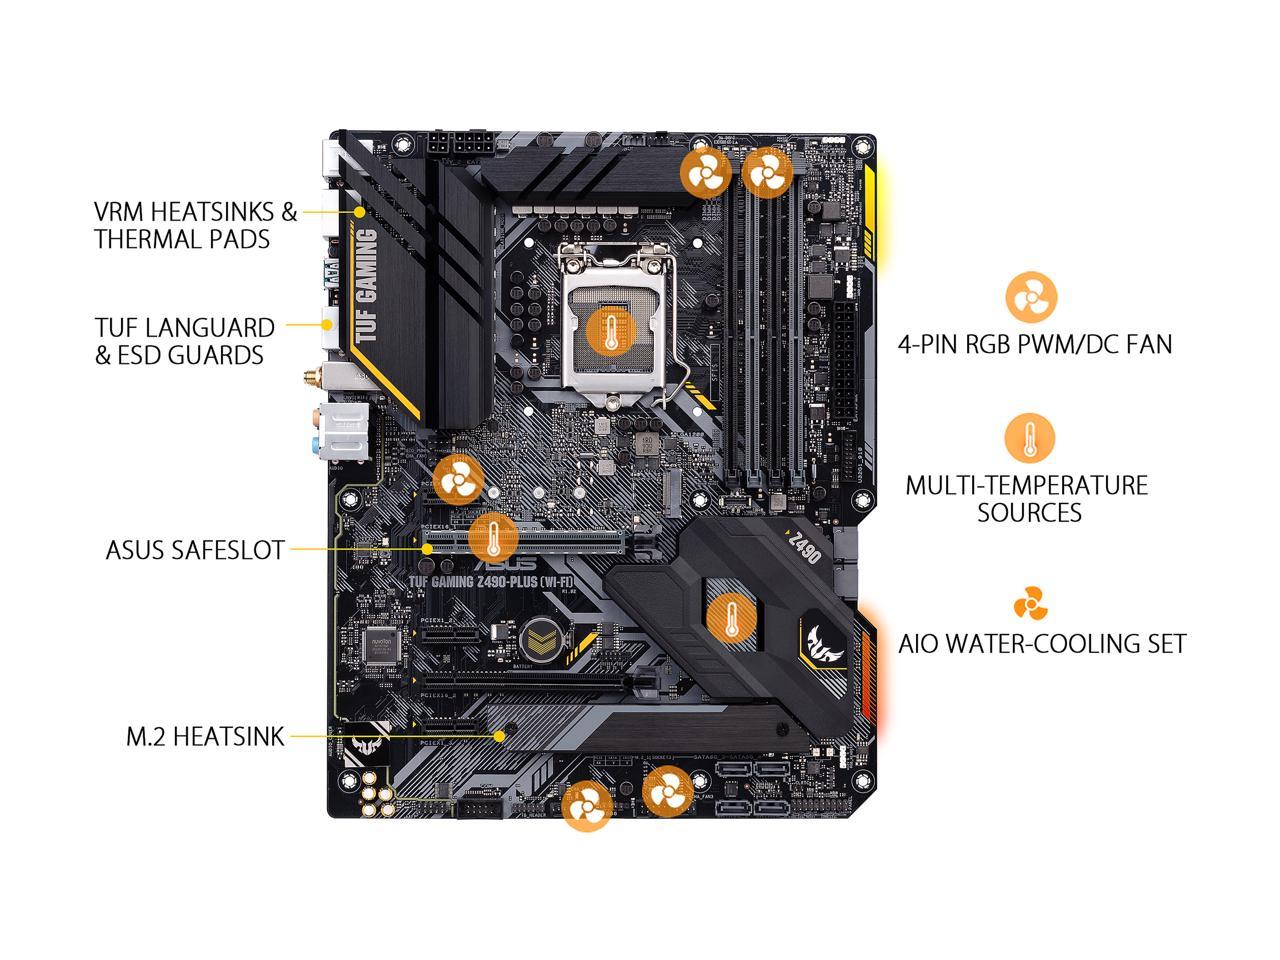 ASUS TUF GAMING Z490-PLUS (WI-FI) LGA 1200 (Intel 10th Gen) Intel Z490  (WiFi 6) SATA 6Gb/s ATX Intel Motherboard (Dual M.2, 12+2 Power Stages, USB  3.2 